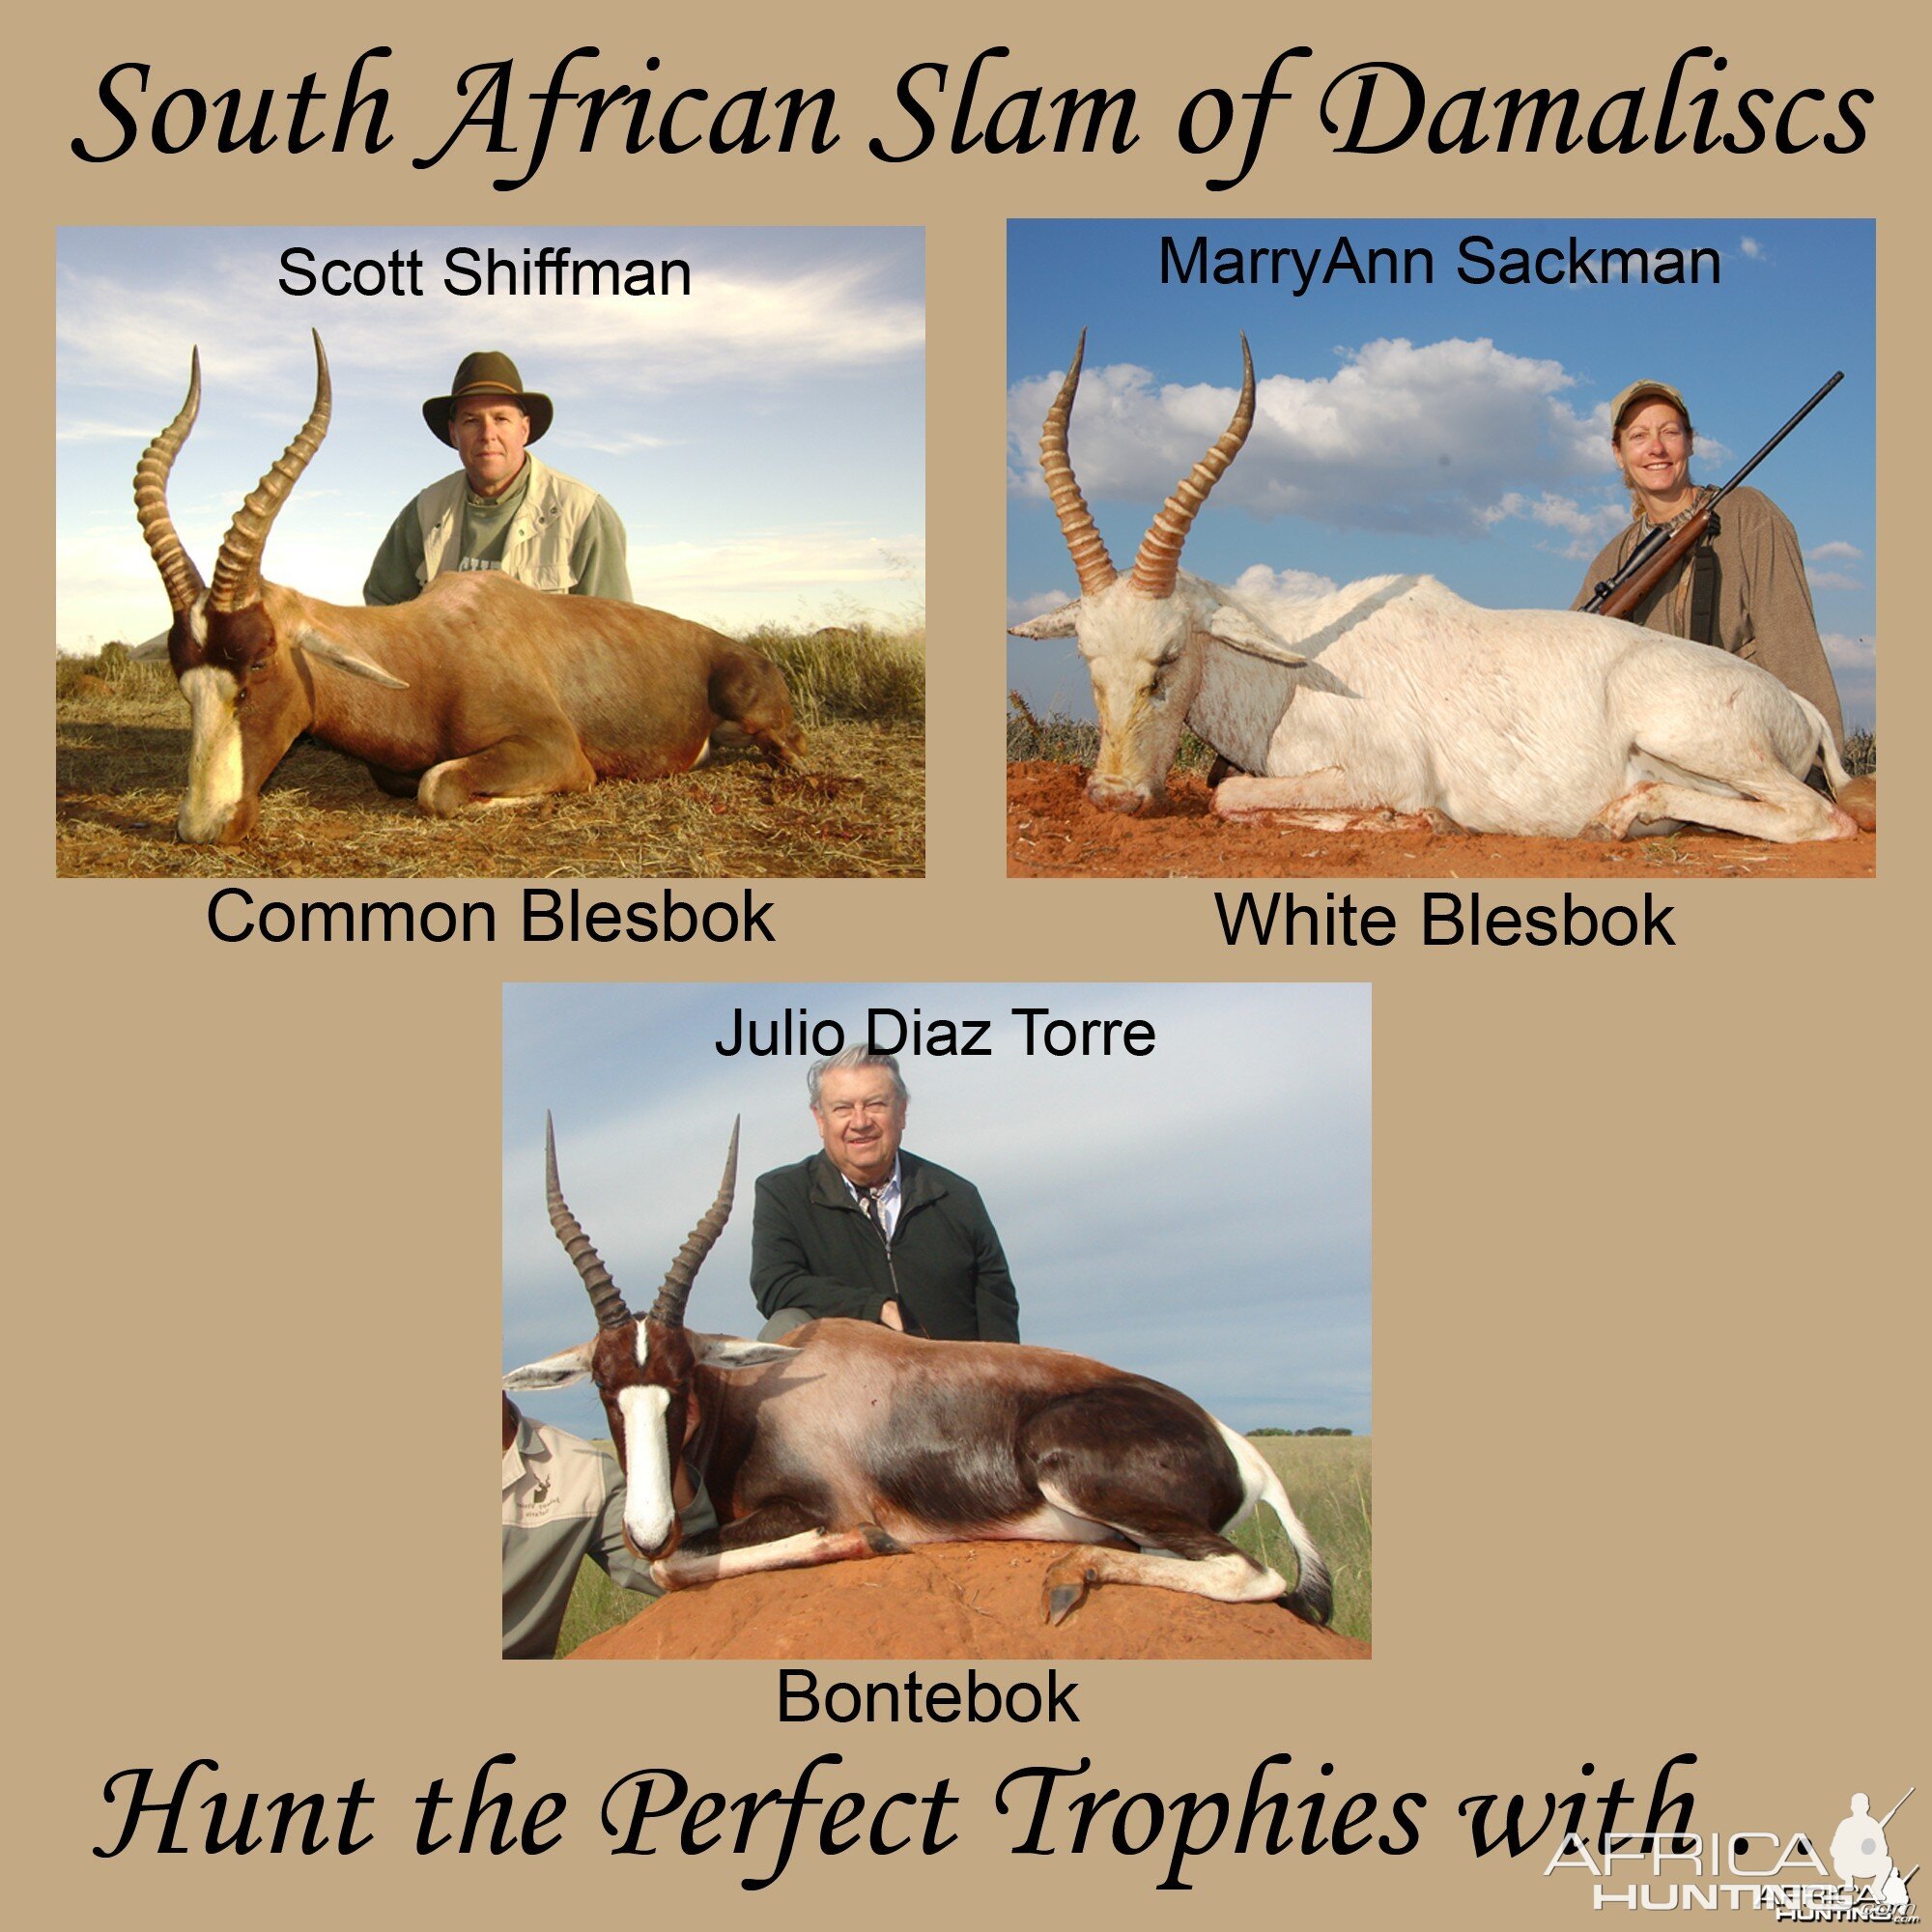 South African Slam of Damaliscs